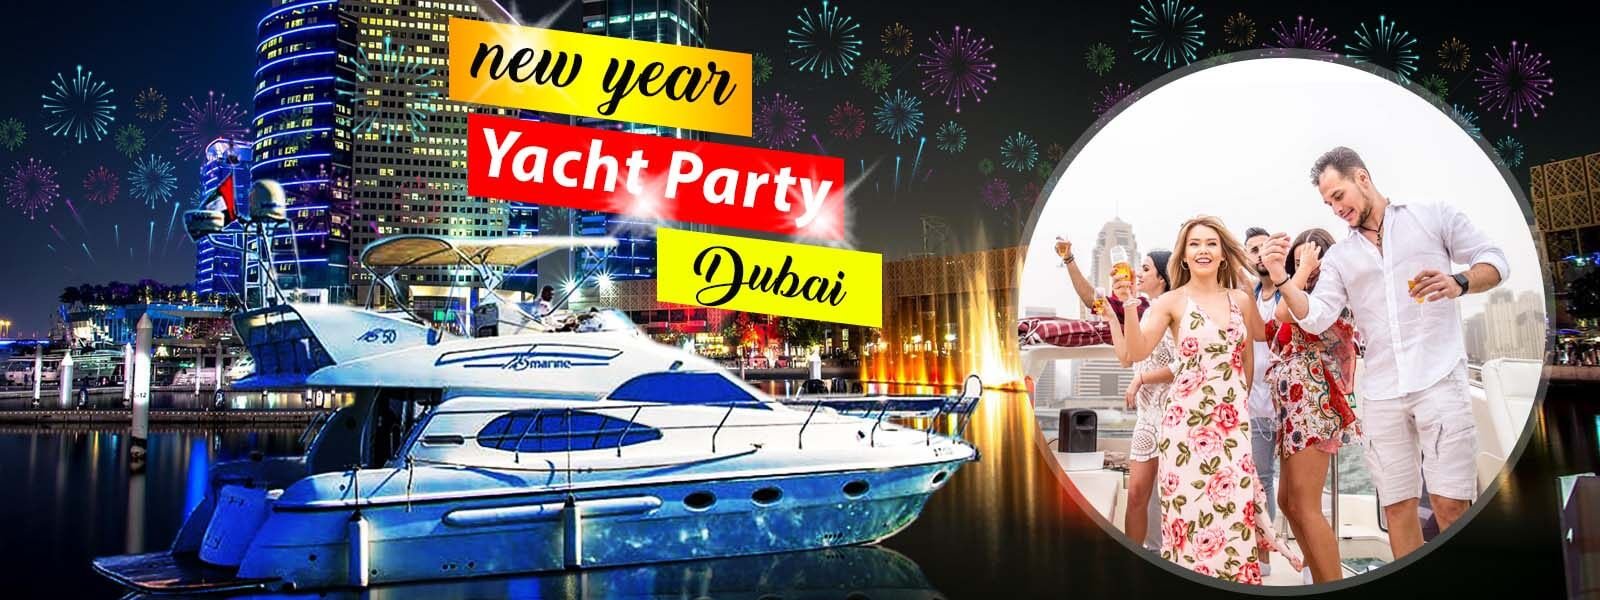 dubai yacht party nye